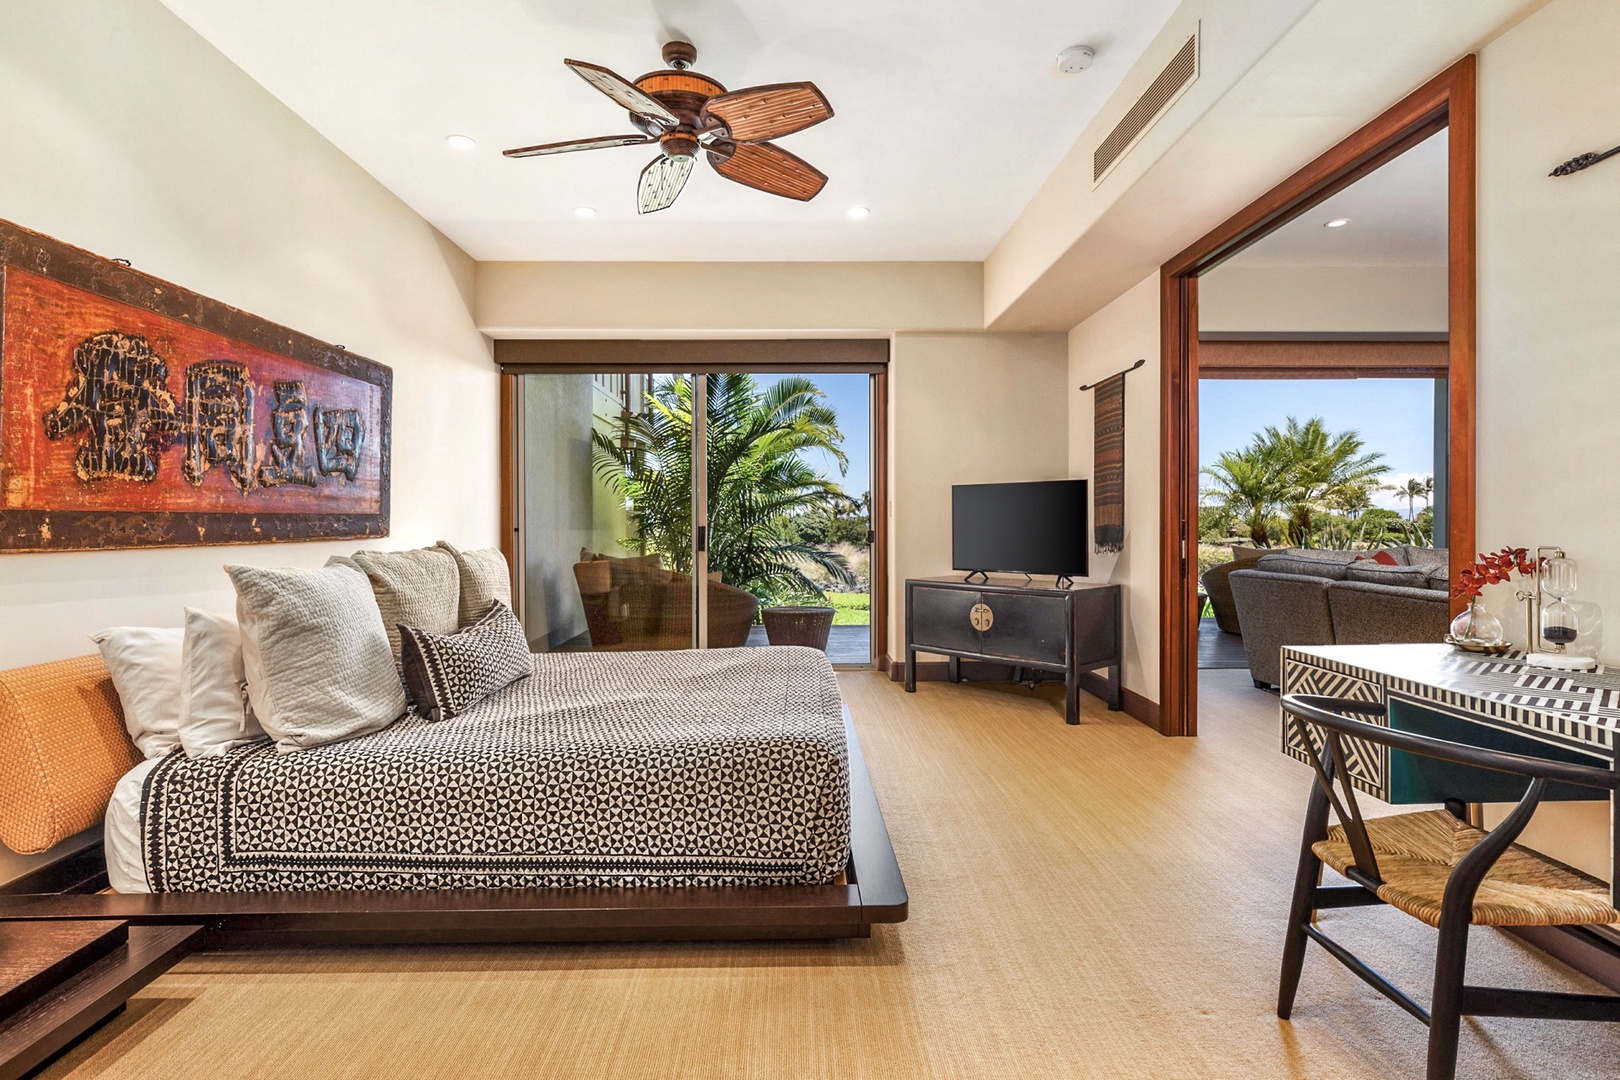 Kailua Kona Vacation Rentals, 3BD Ka'Ulu Villa (131C) at Four Seasons Resort at Hualalai - Downstairs primary bedroom suite with private deck, flat screen TV, sliding doors to bonus retreat room, and en-suite bath.